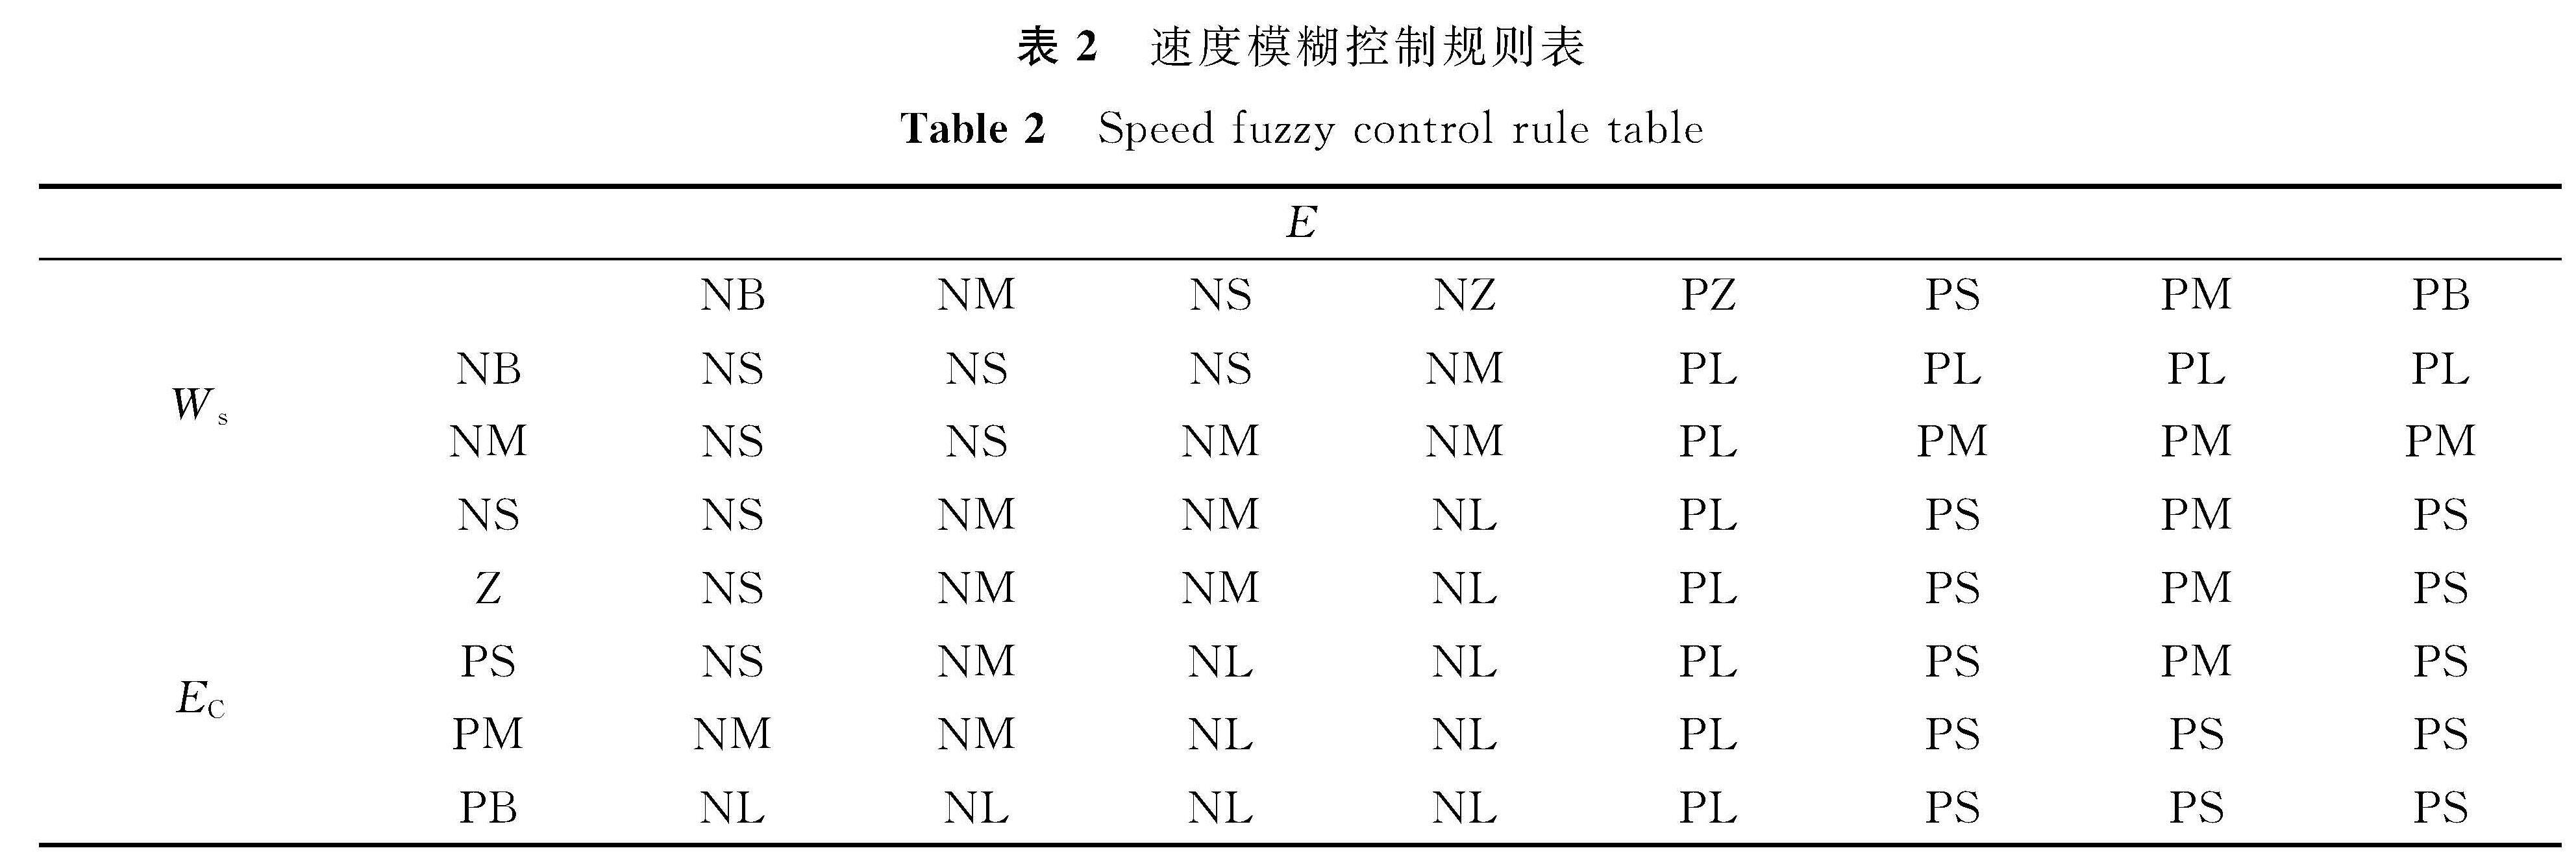 表2 速度模糊控制规则表<br/>Table 2 Speed fuzzy control rule table